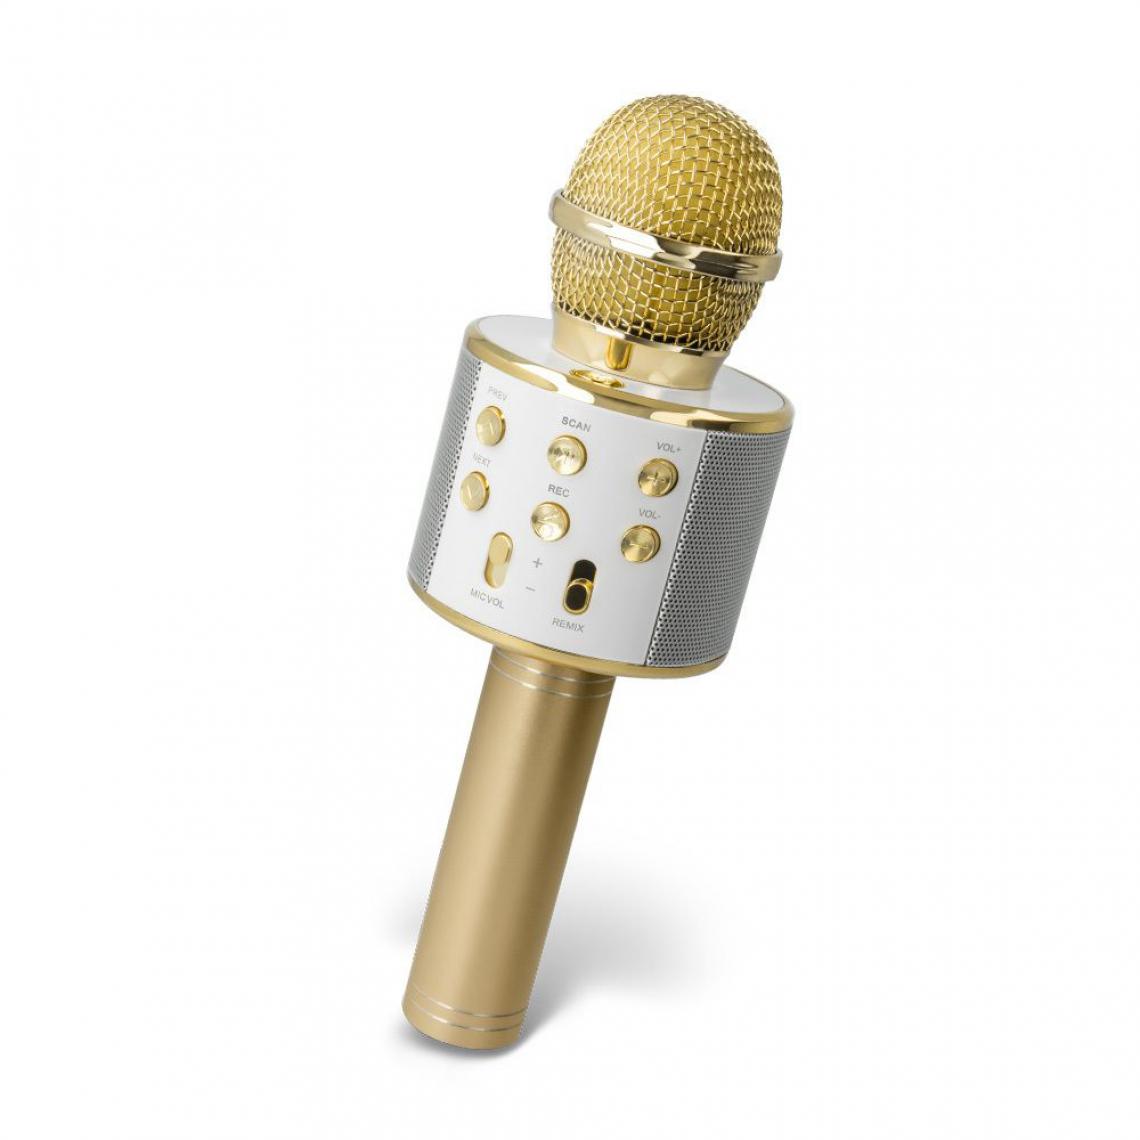 Ozzzo - Microphone Karaoke bluetooth haut parleur ozzzo Gold Or pour SAMSUNG Galaxy A8+ 2018 A730FD - Autres accessoires smartphone